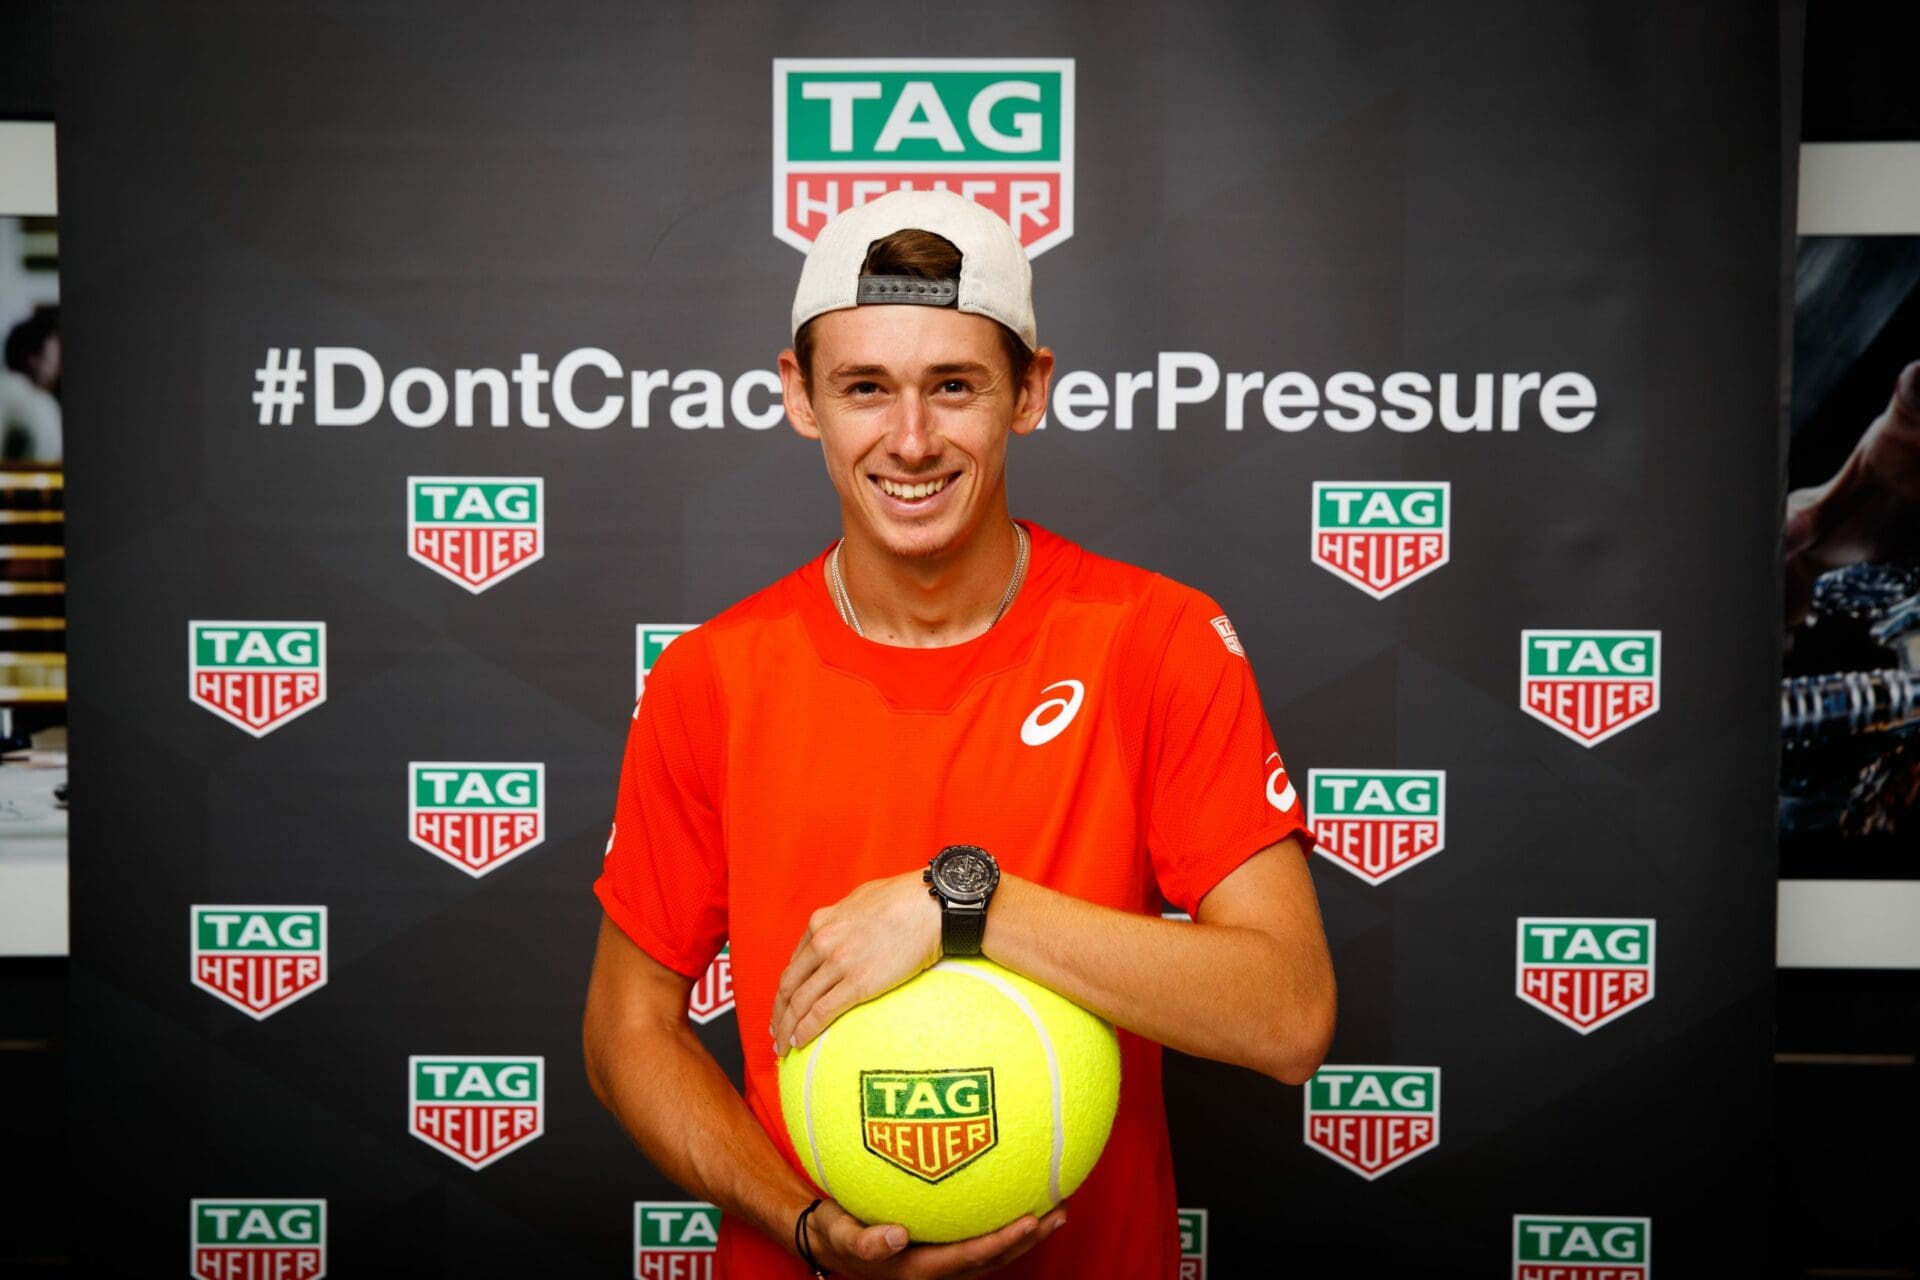 “We want to take the top guys down,” says new TAG Heuer tennis ambassador Alex De Minaur